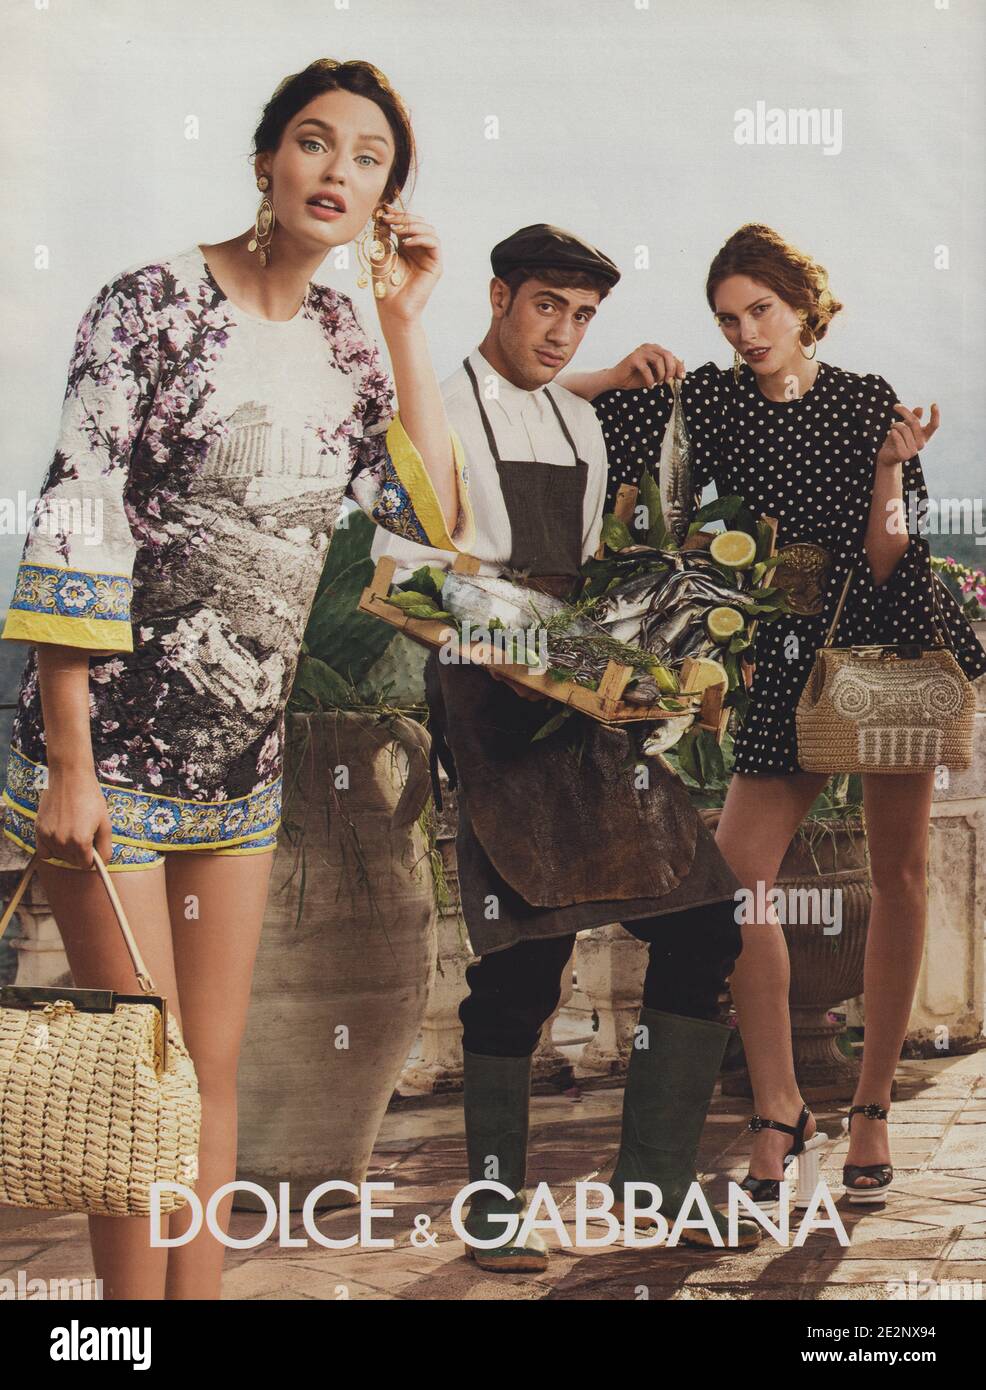 Dolce Gabbana Poster | art-kk.com